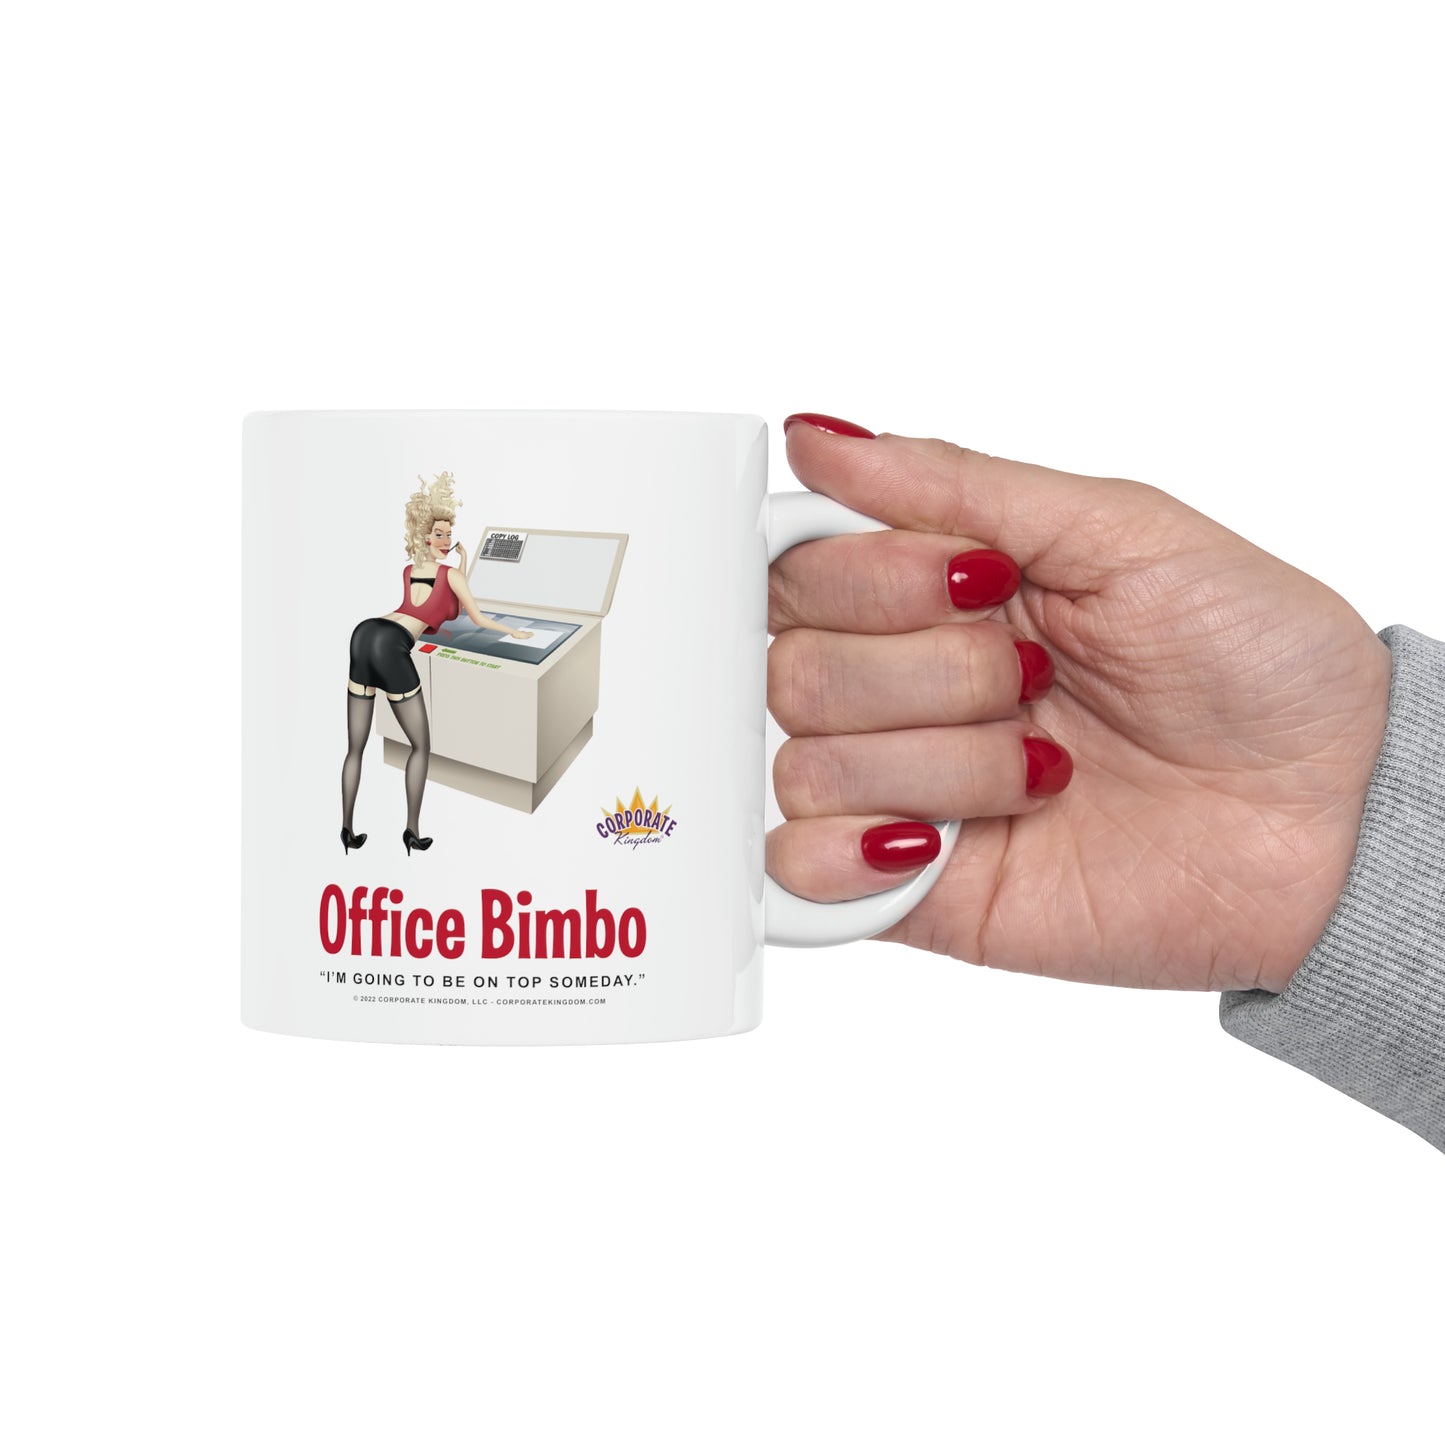 Office Bimbo Coffee Mug by Corporate Kingdom®